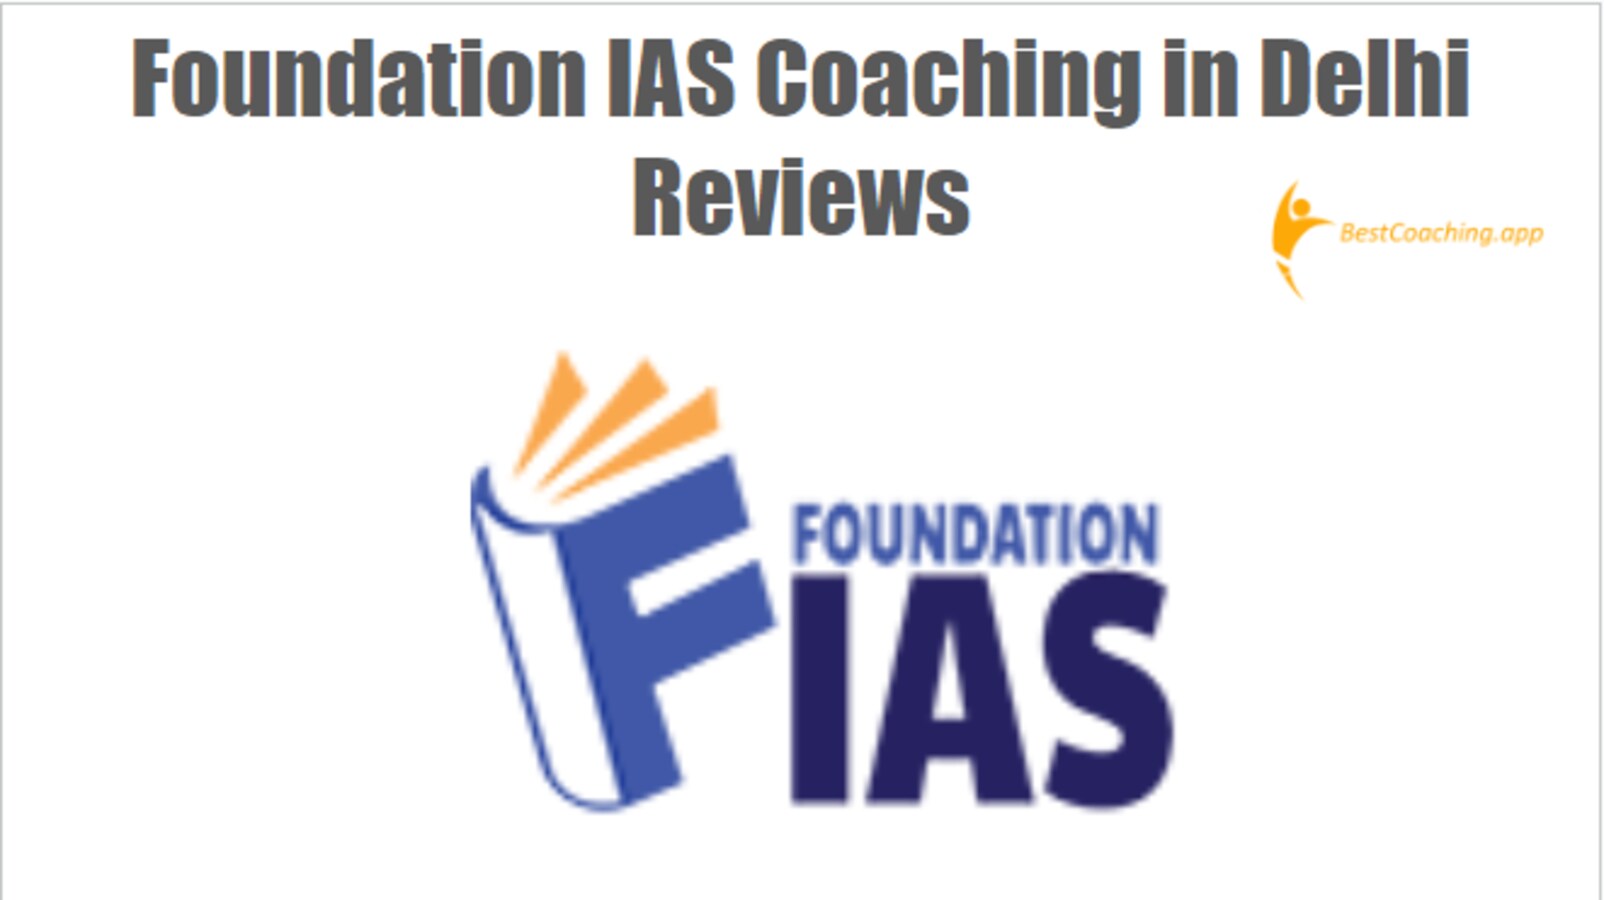 Foundation IAS Coaching in Delhi Review